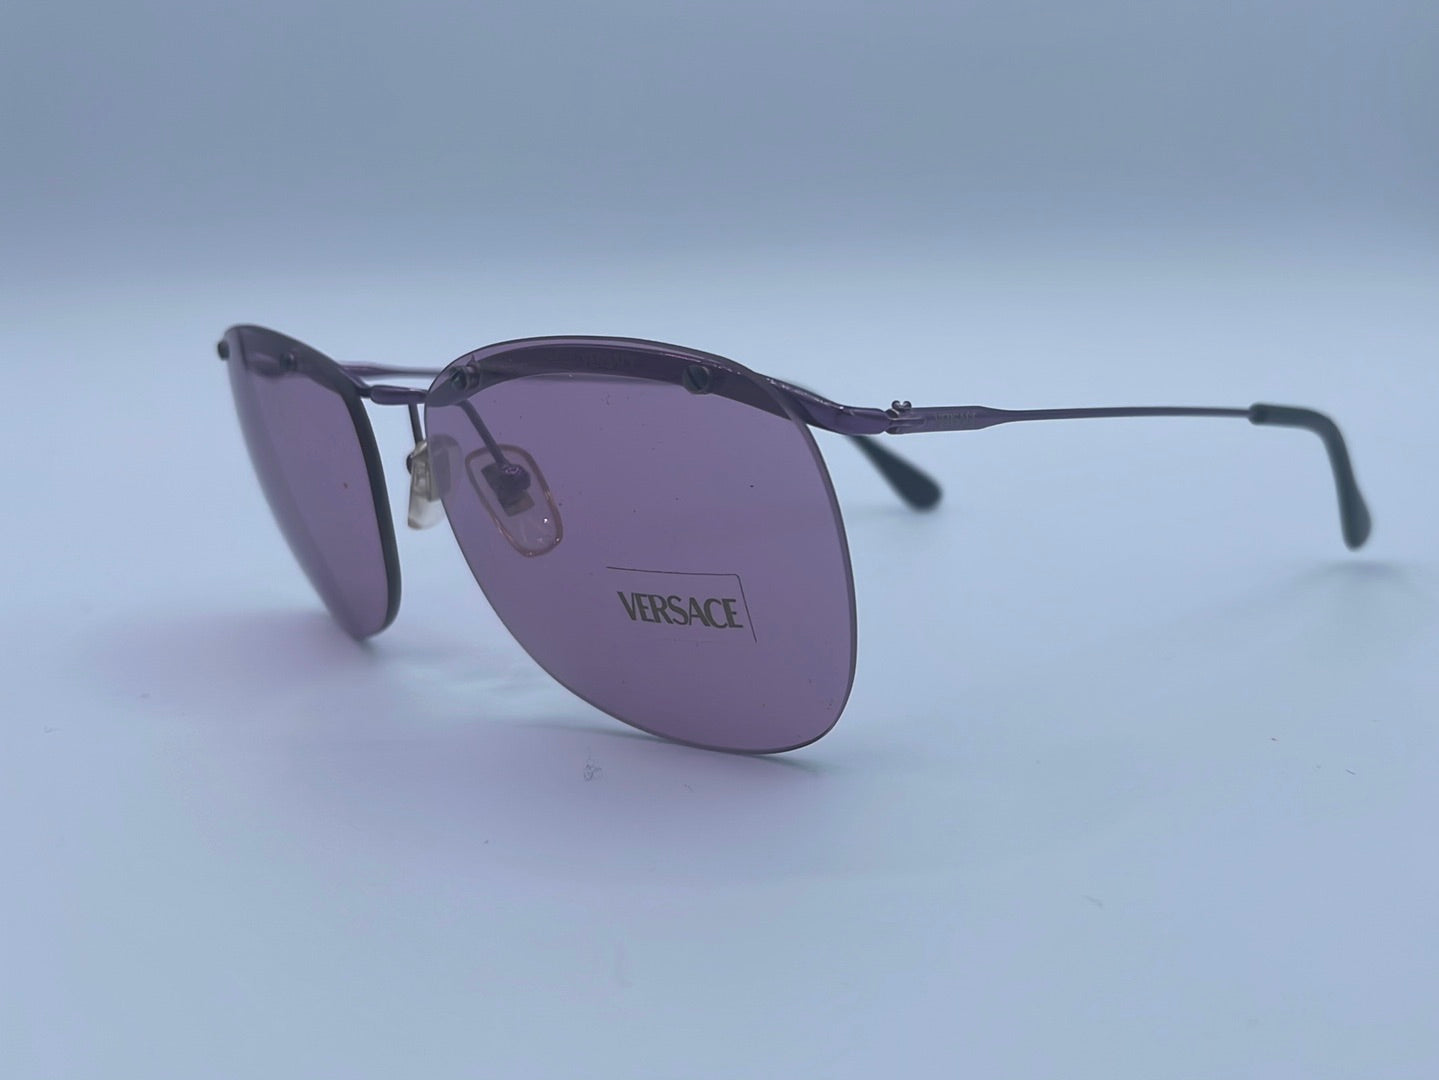 Versace Sunglasses x61 purple